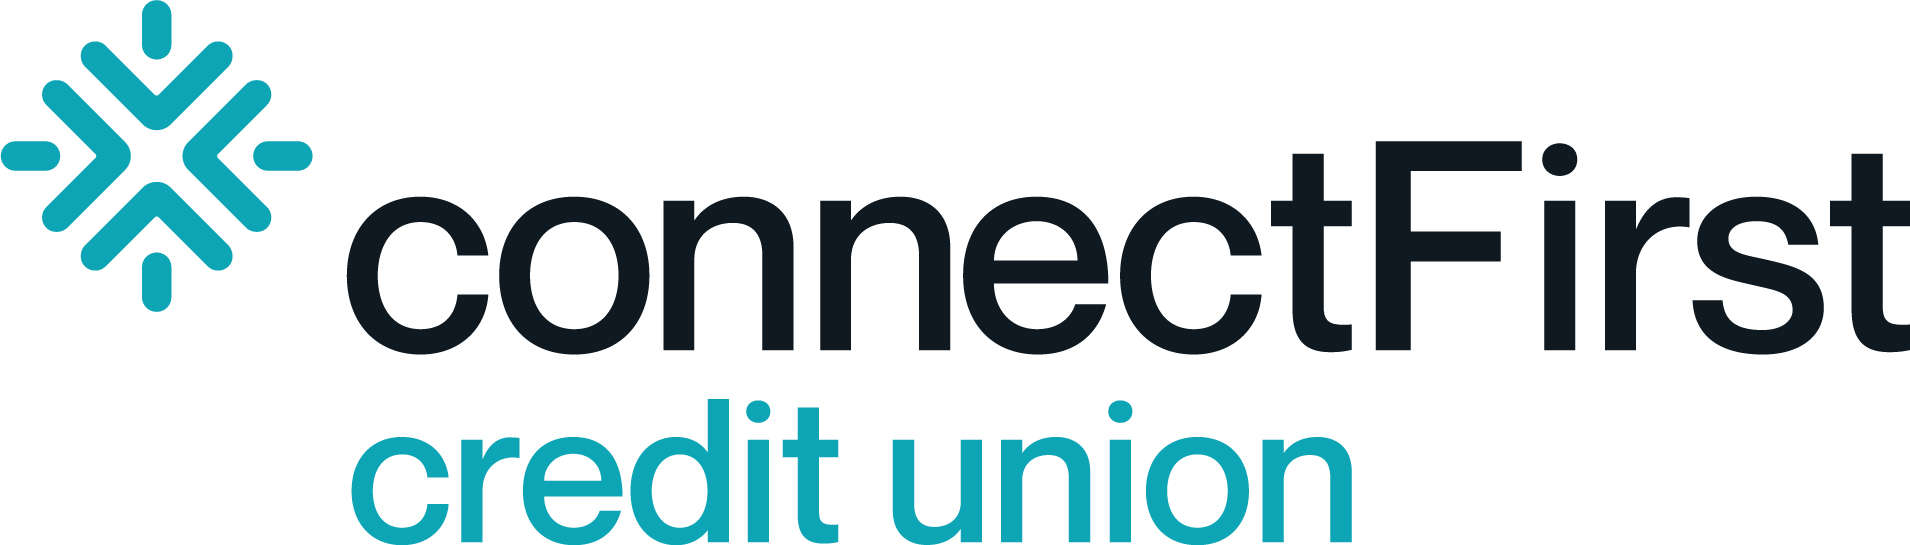 Connect First Credit Union Ltd. Logo